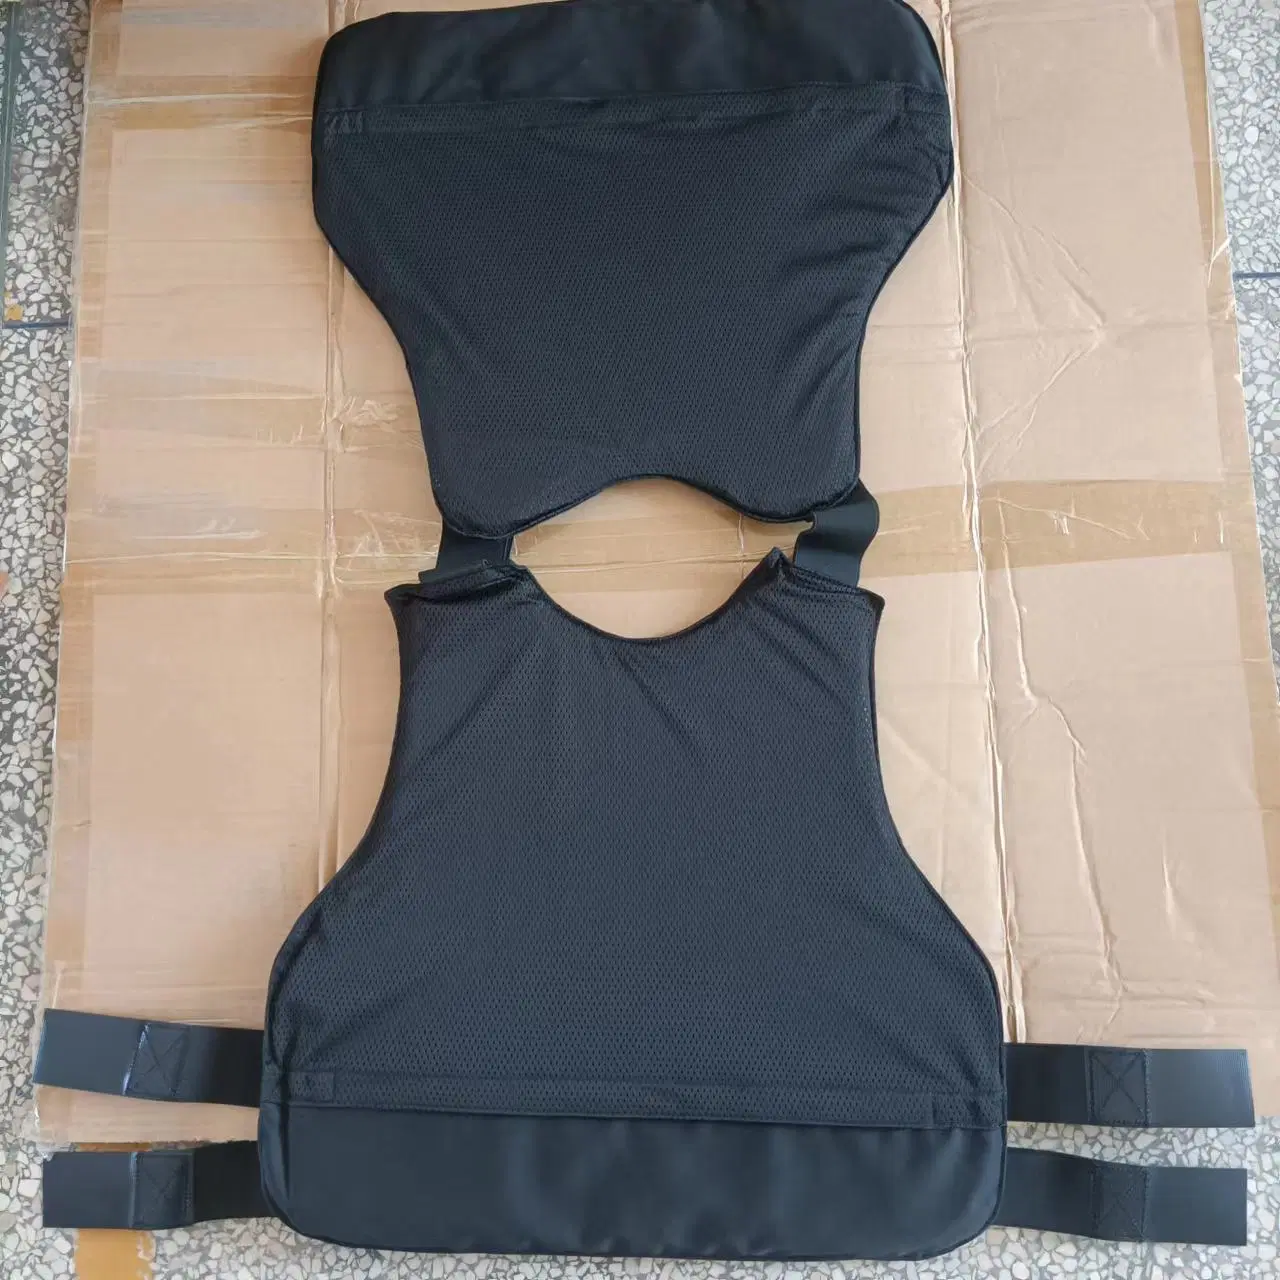 Police Military Body Armor Ballistic Concealed Underwear Bullet Proof Bulletproof Vest